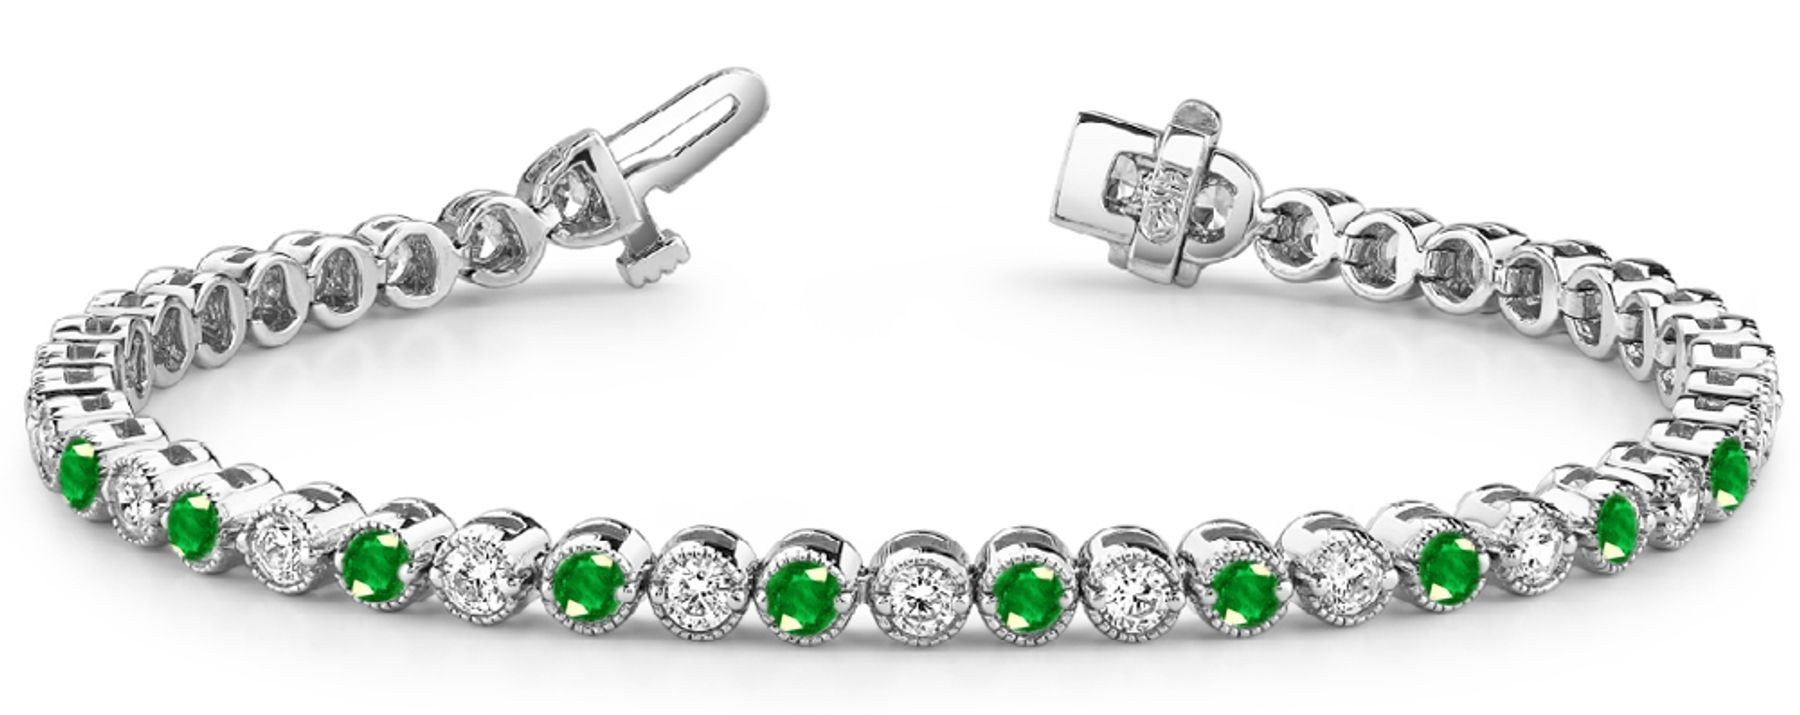 Alternating Rich Green Emeralds & Brilliant Diamonds Spaced At Intervals